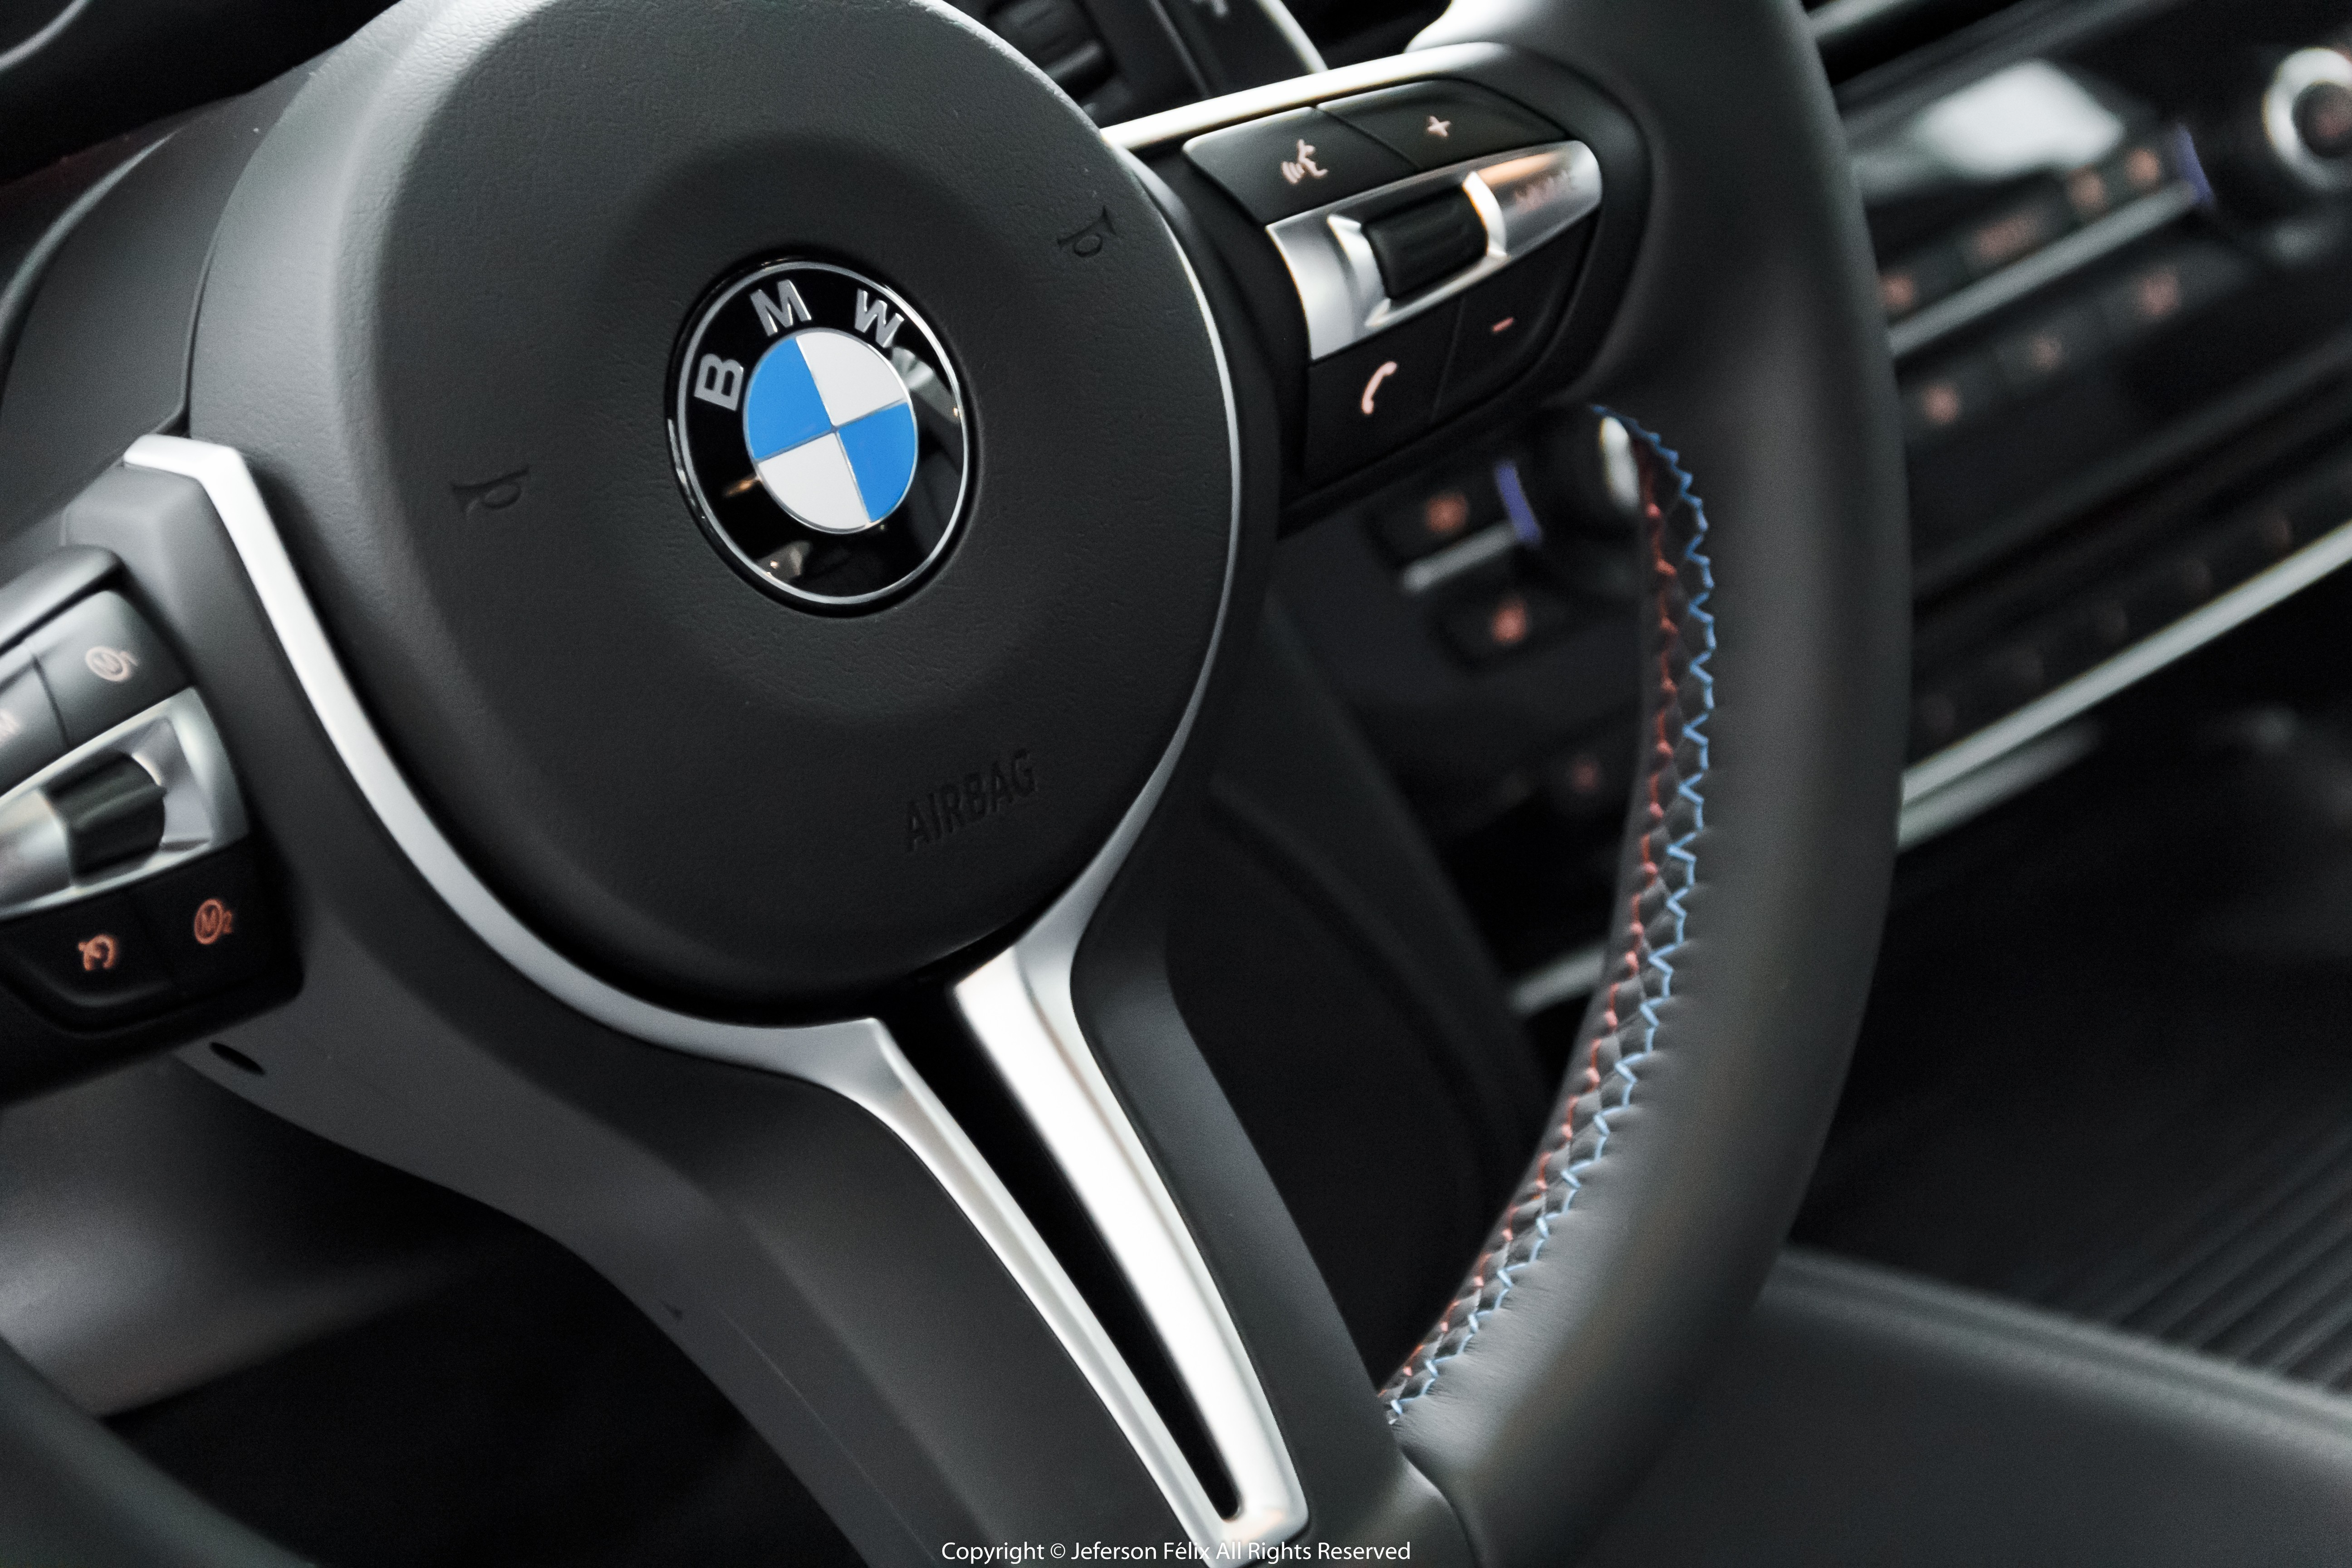 General 5184x3456 BMW car car interior steering wheel